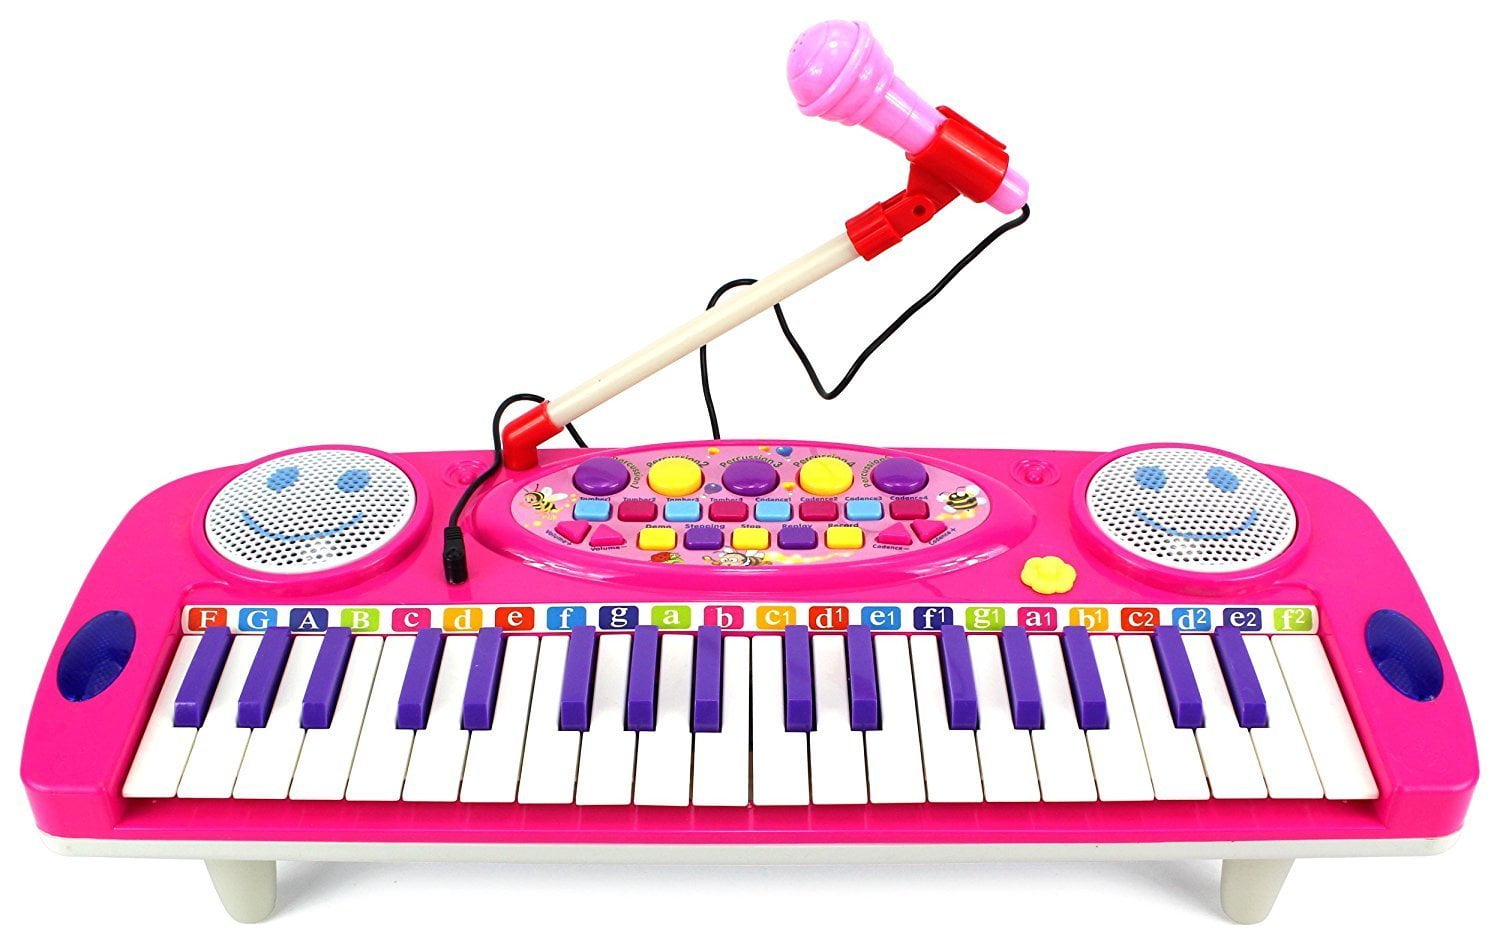 61 Keys Kids Piano Toy Multi-Function Electronic Keyboard Organ Musical Instrument for Kids Nephew Granddaughter Black Daughter Lonian Piano Keyboard Toy for Kids Son Grandson